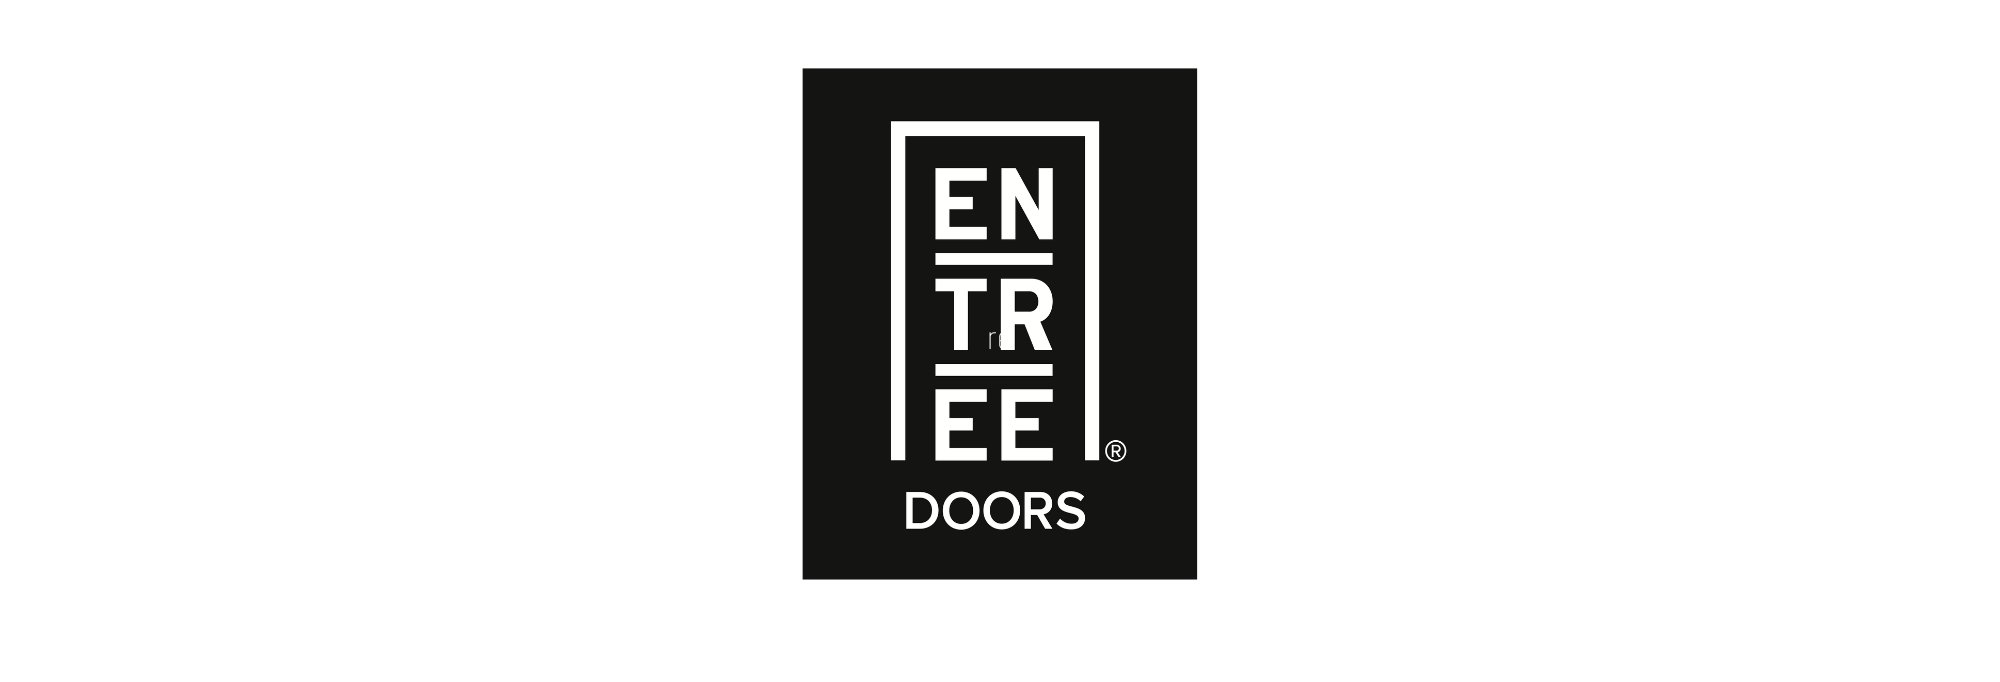 Entree Doors Logo.png